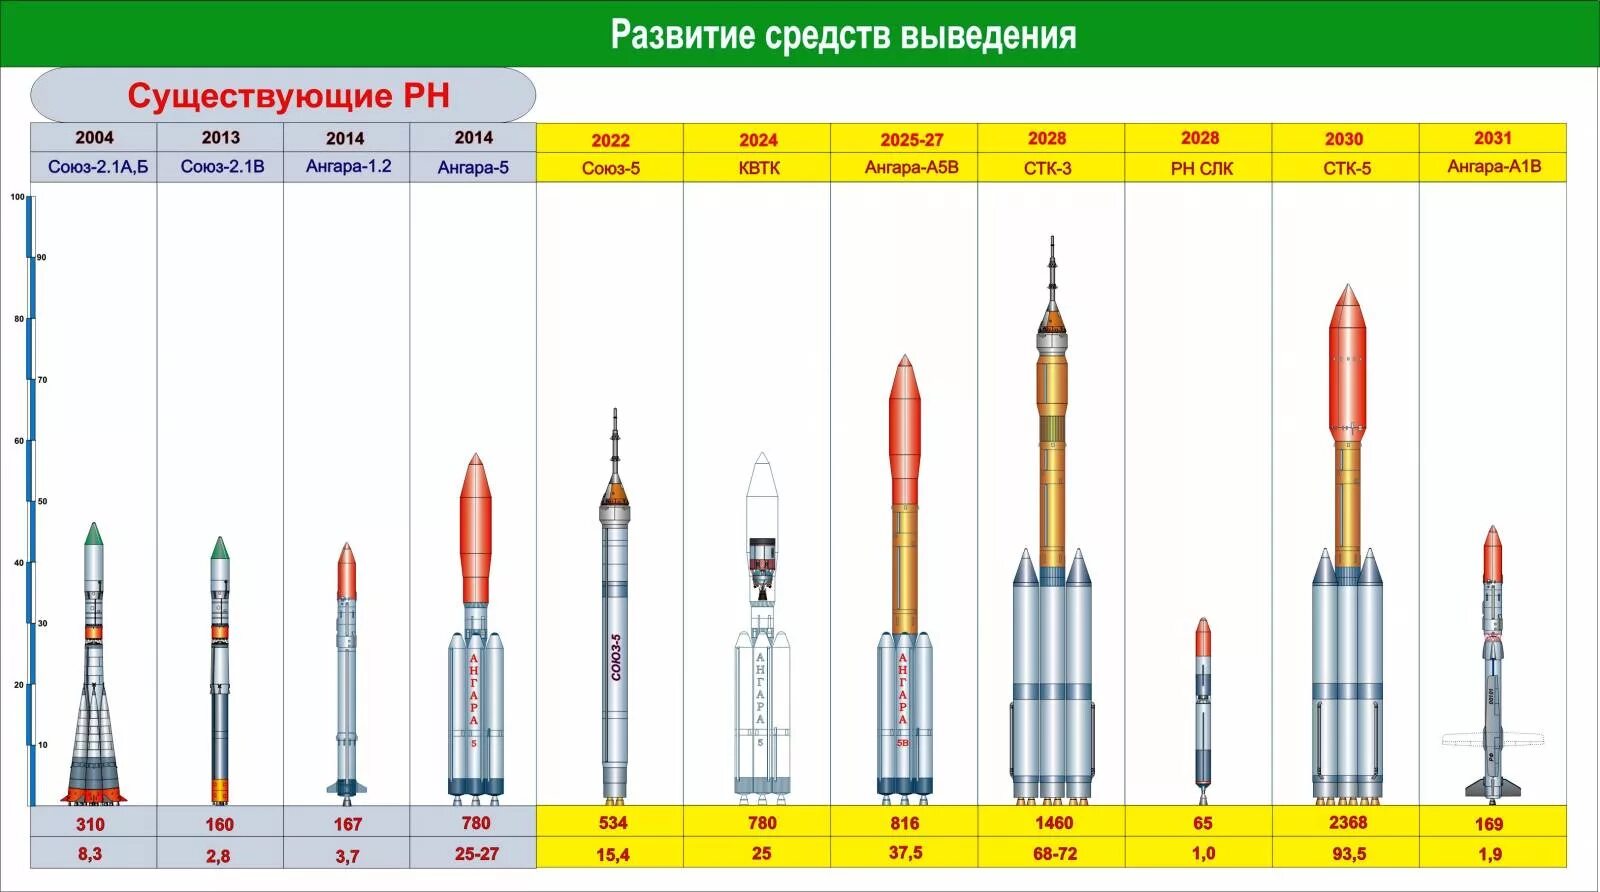 Ракета-носитель Ангара а5 компоновка. Ракета-носитель Союз 2.1 а чертеж. Ангара-1.2 ракета-носитель схема. Ангара 1.1 ракета-носитель. Ангара а5 размеры